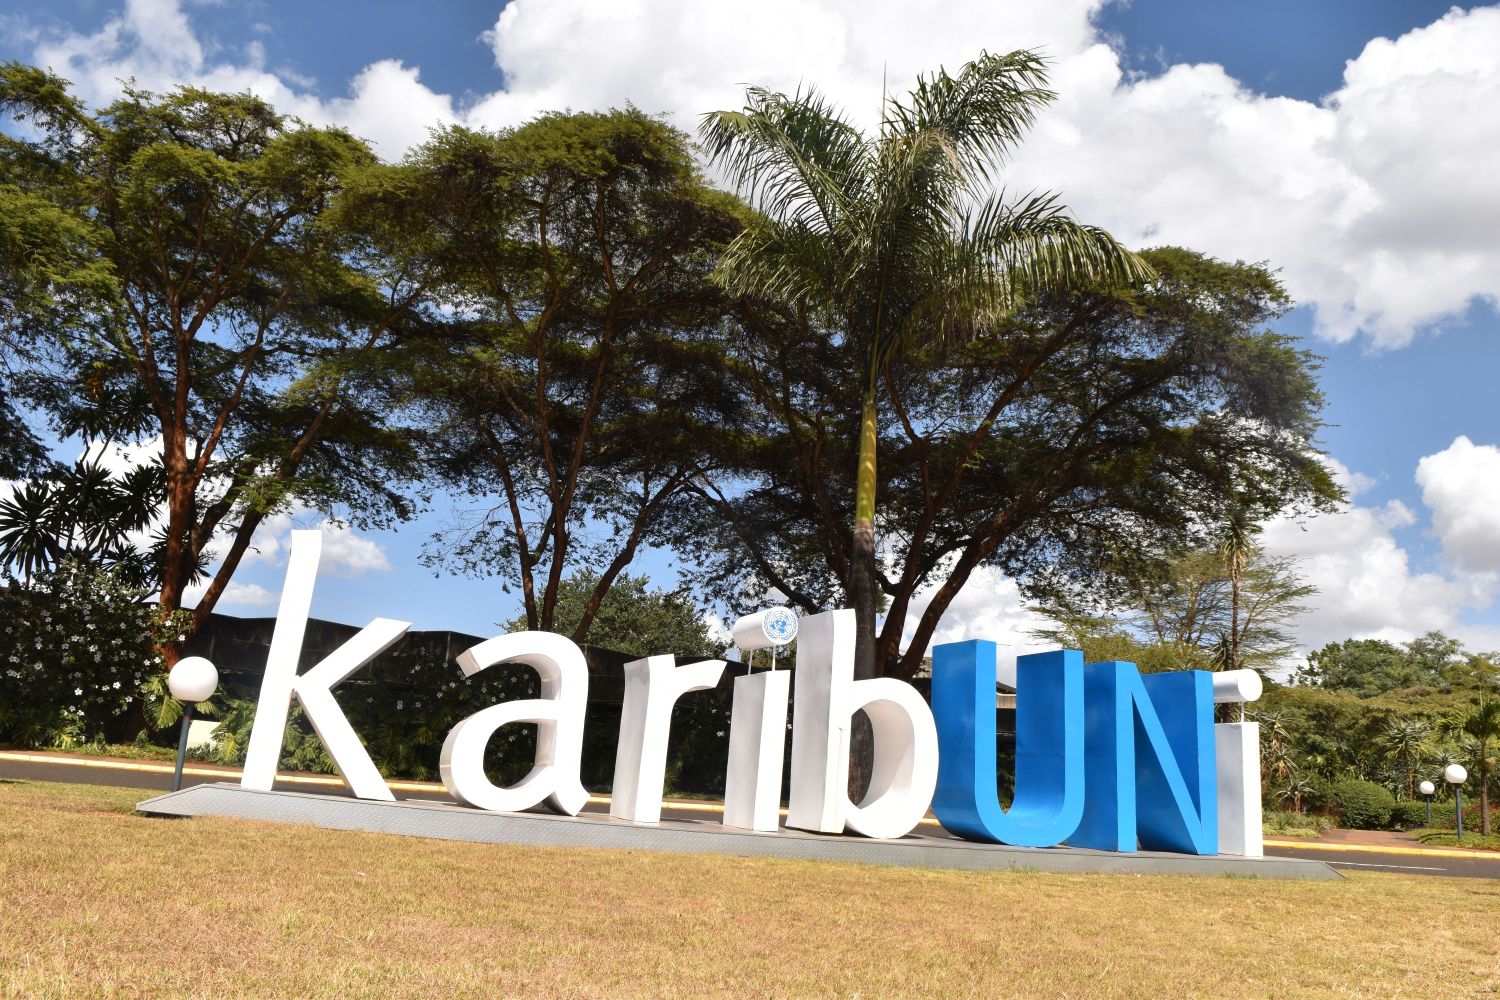 Kiribuni sign in Nairobi